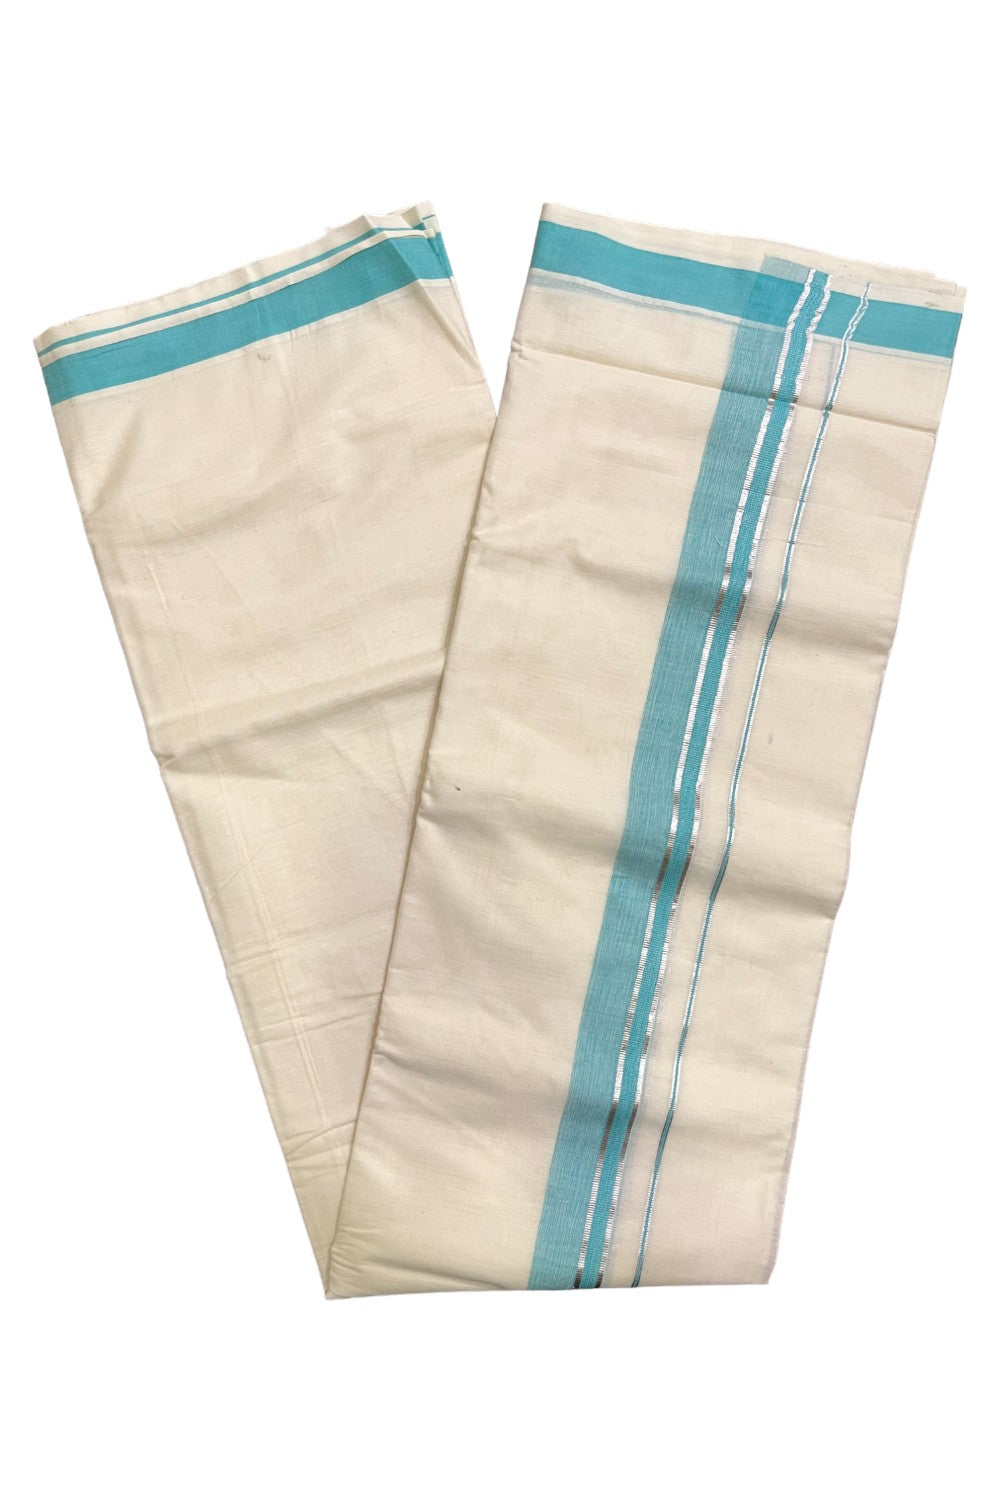 Kerala Pure Cotton Double Mundu with Silver Kasavu and Turquoise Border (South Indian Kerala Dhoti)